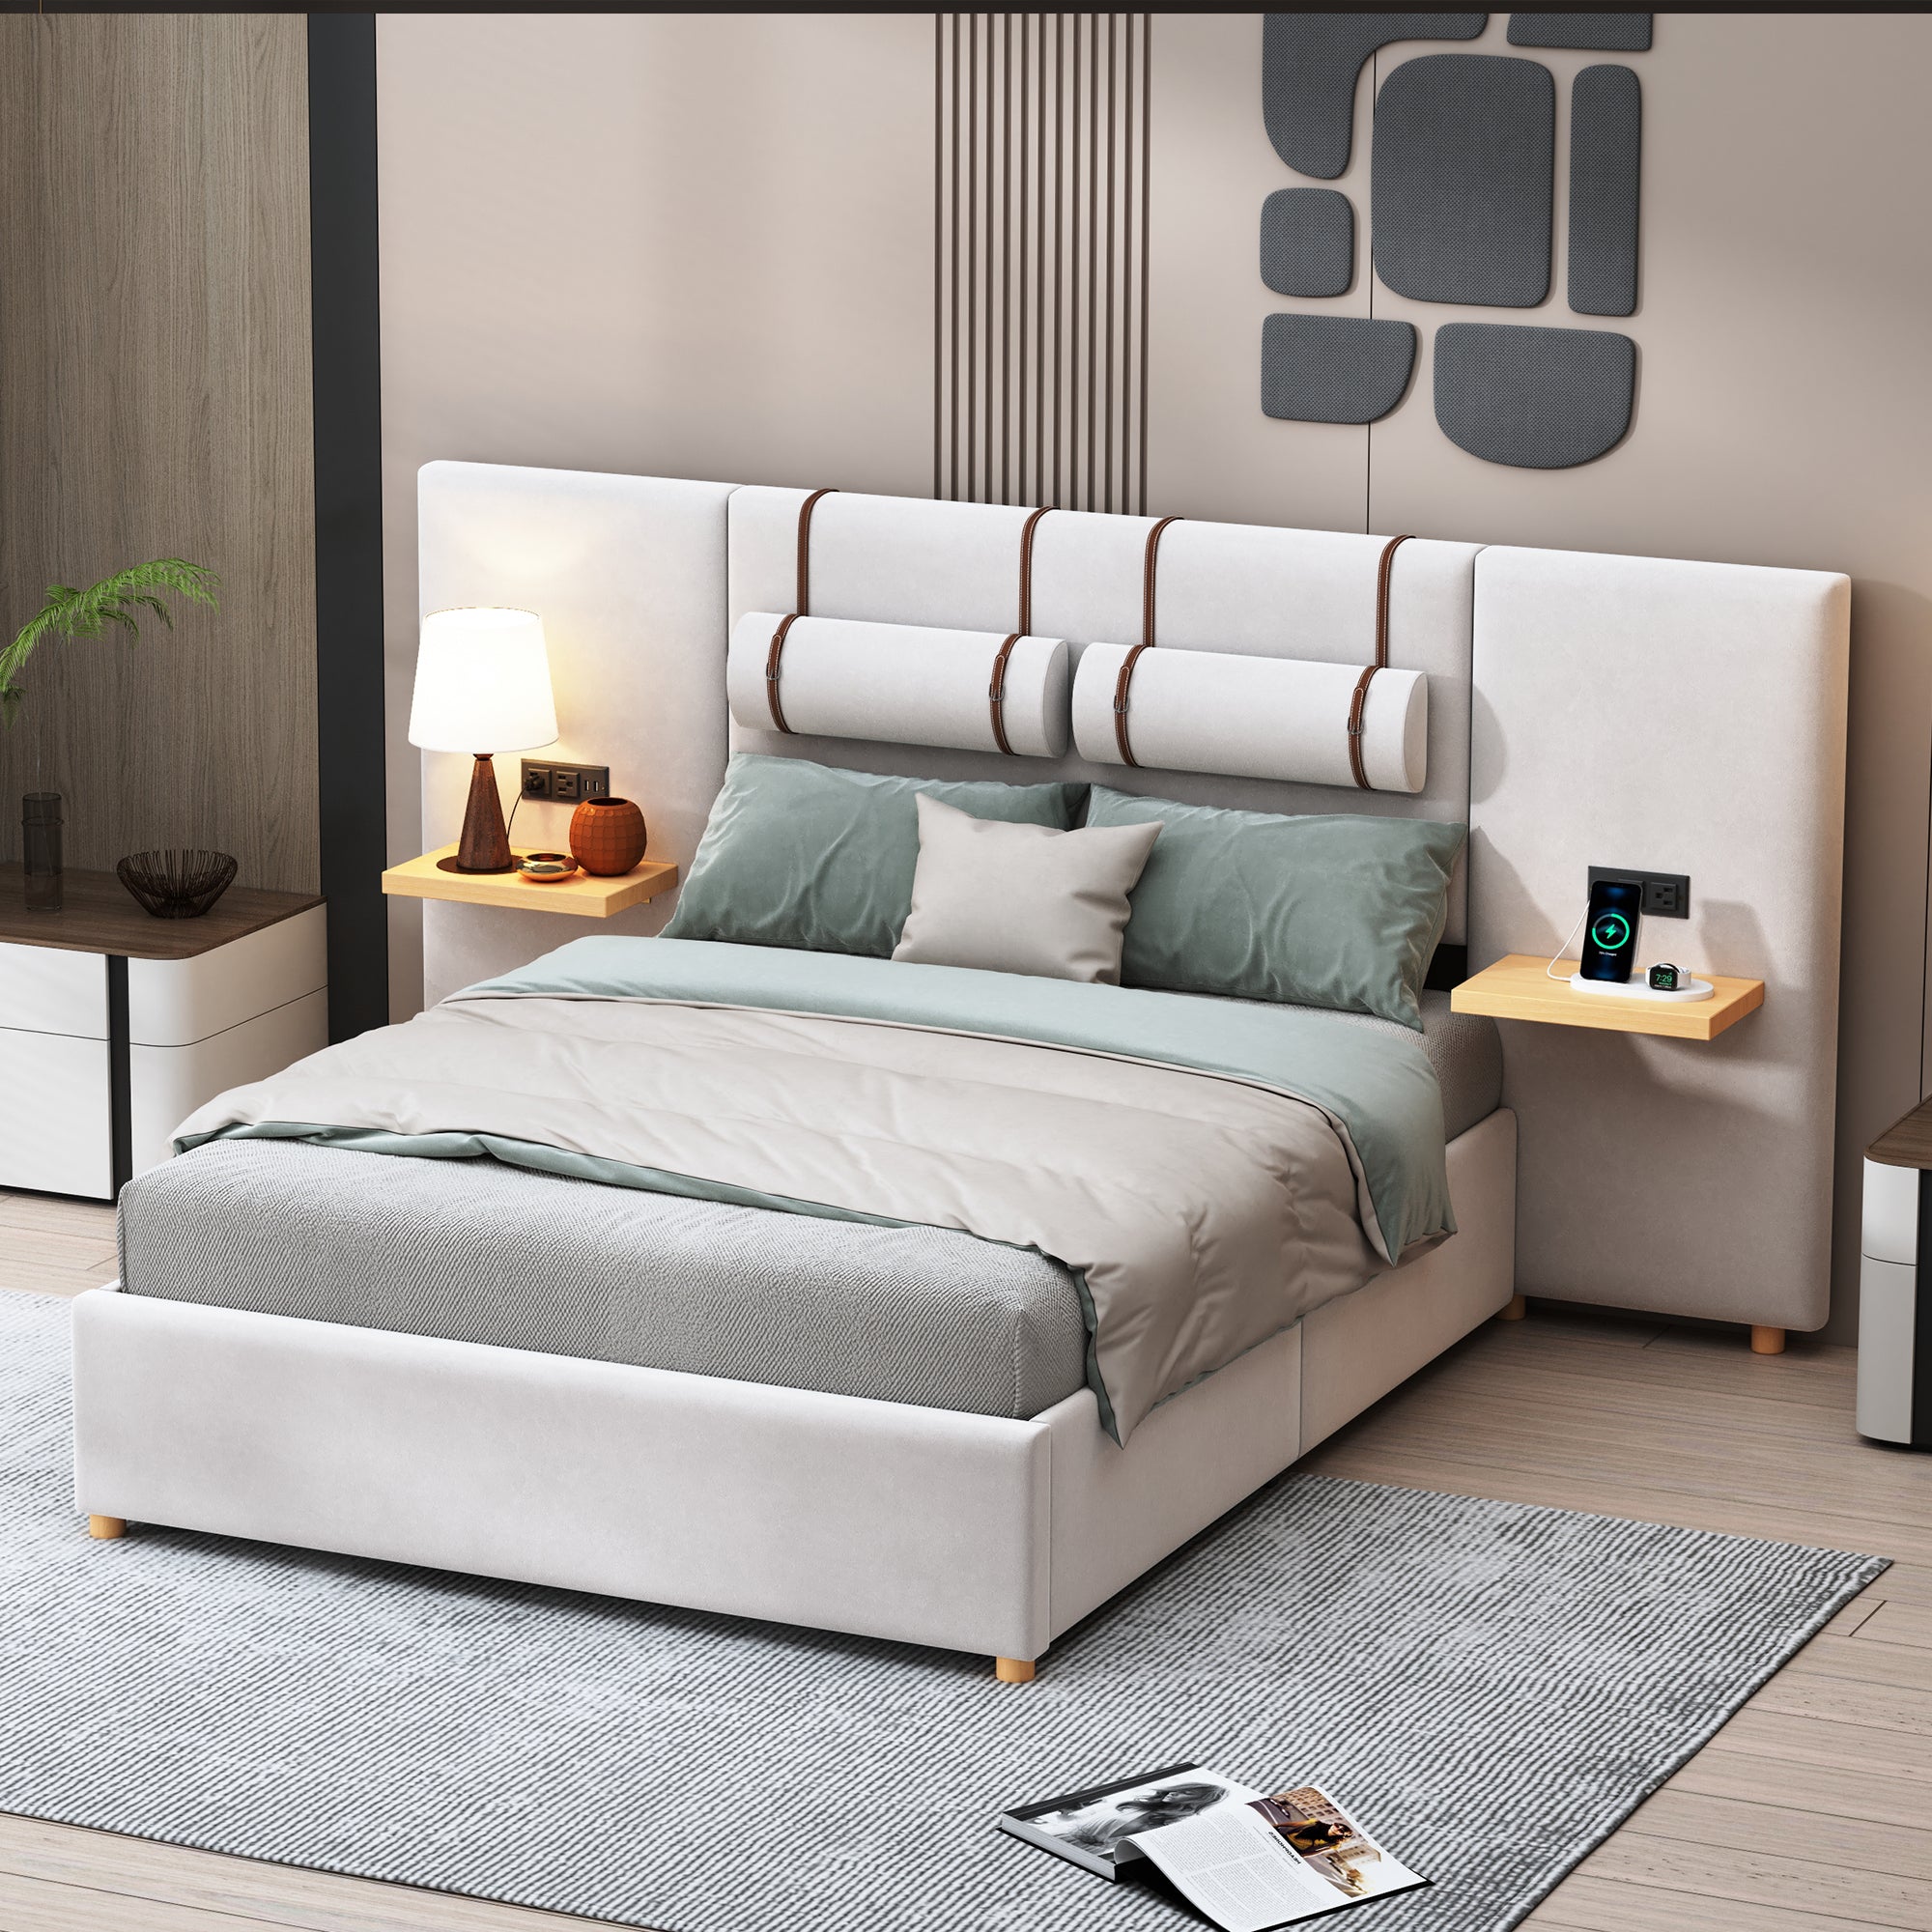 Full Size Upholstered Platform Bed, Two Outlets and USB Charging Ports on Both Sides, Two Bedside Pillows, Storage Shelves, Velvet, Beige